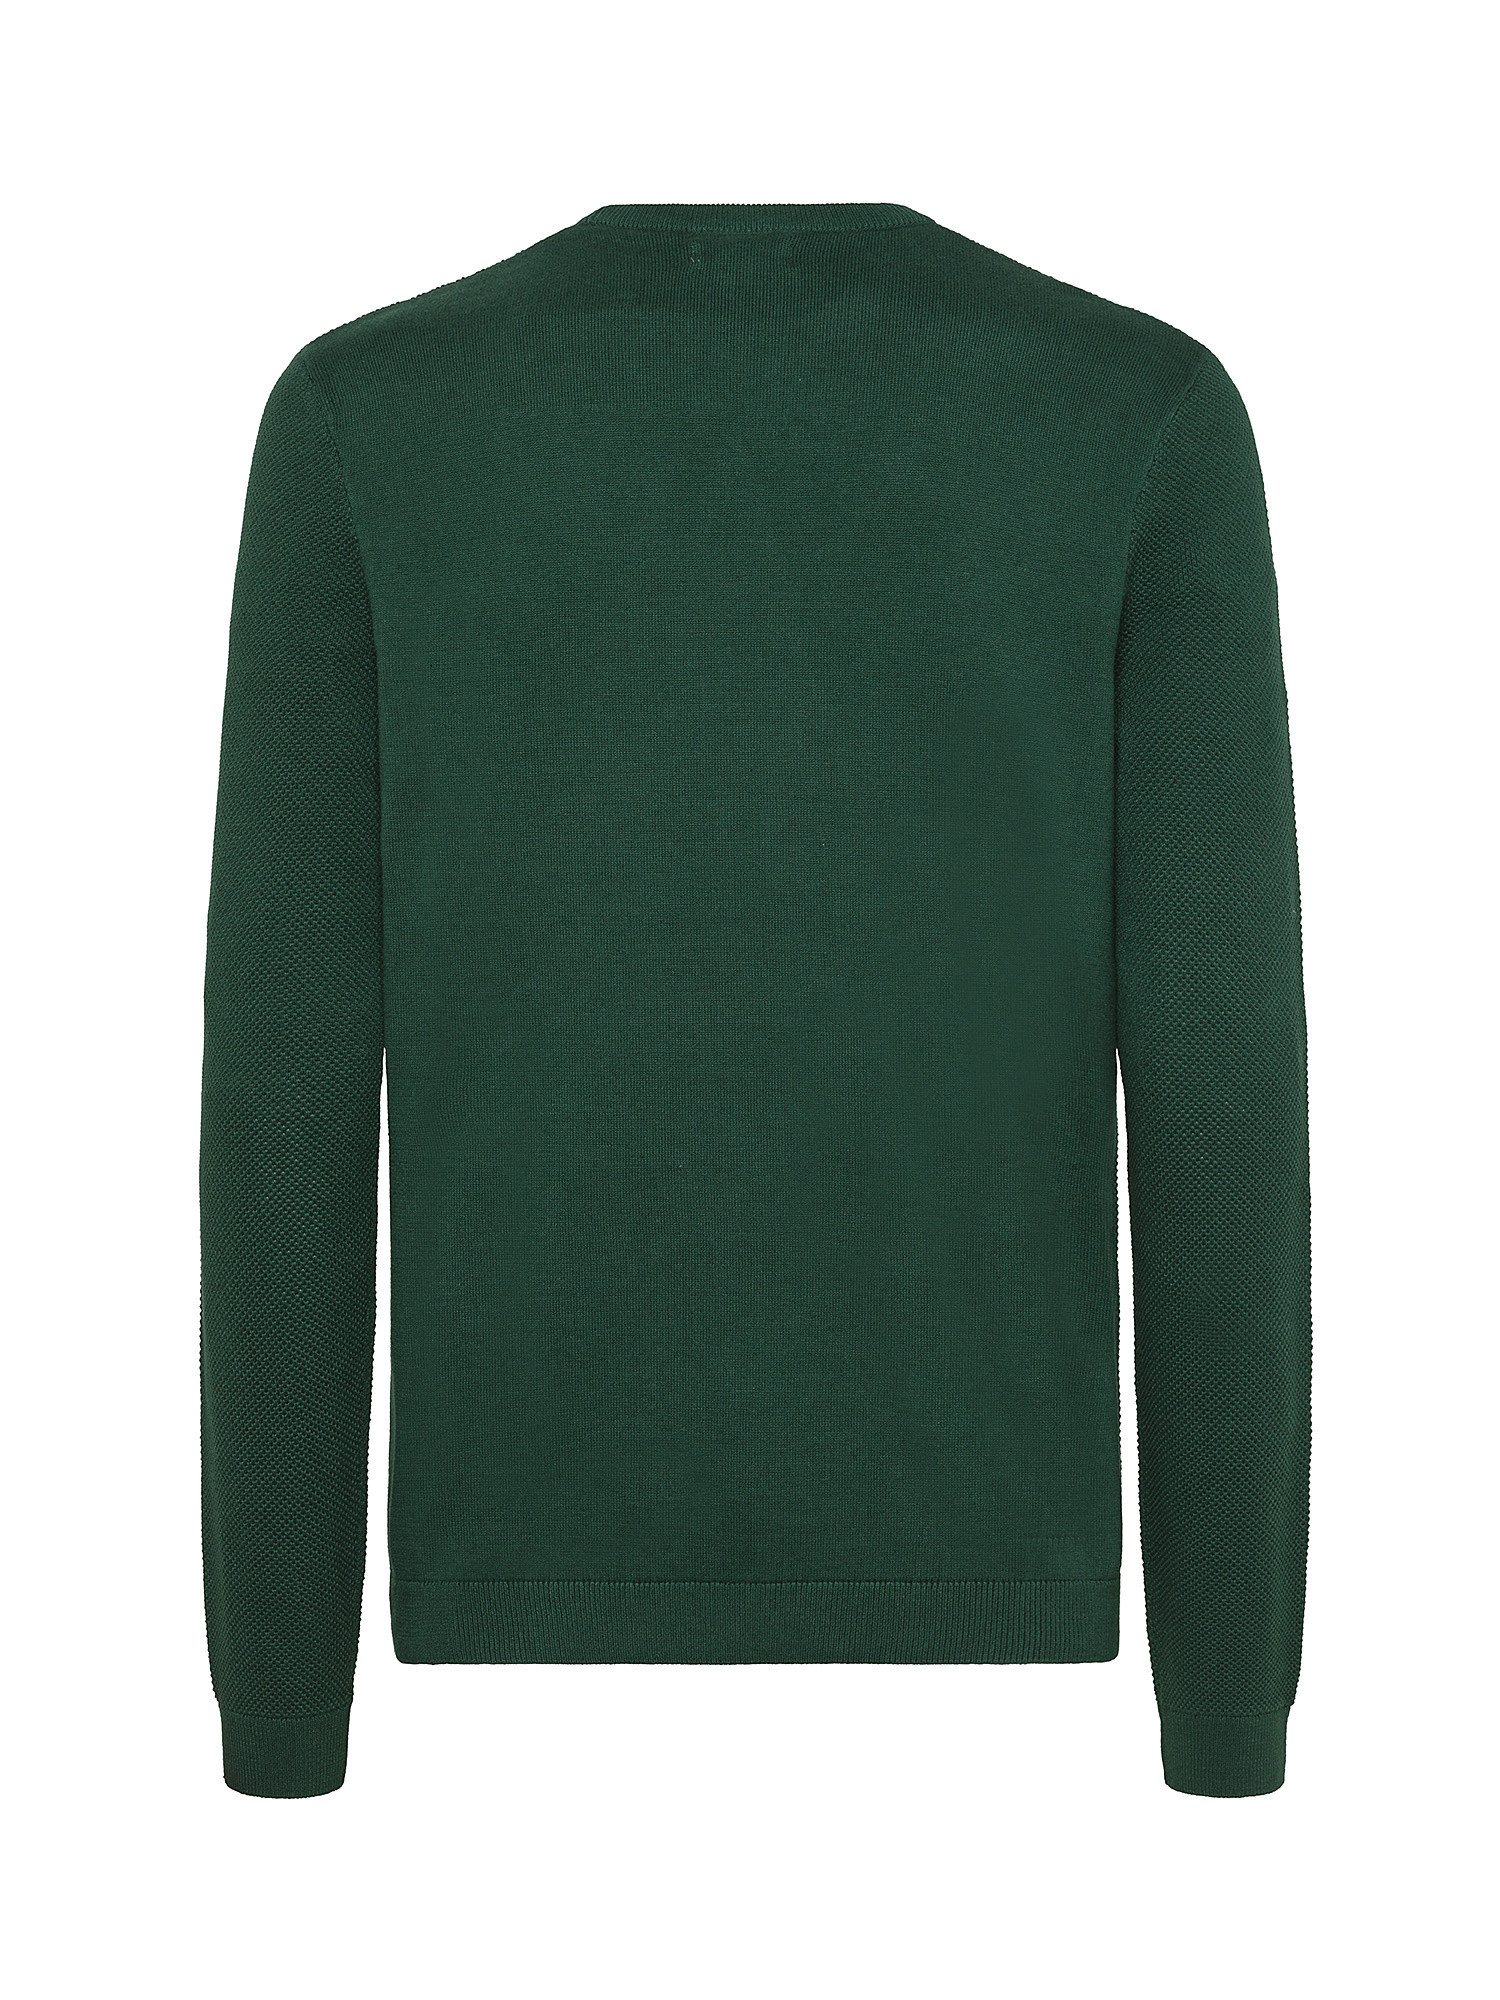 Luca D'Altieri - Crew neck sweater in pure cotton, Dark Green, large image number 1